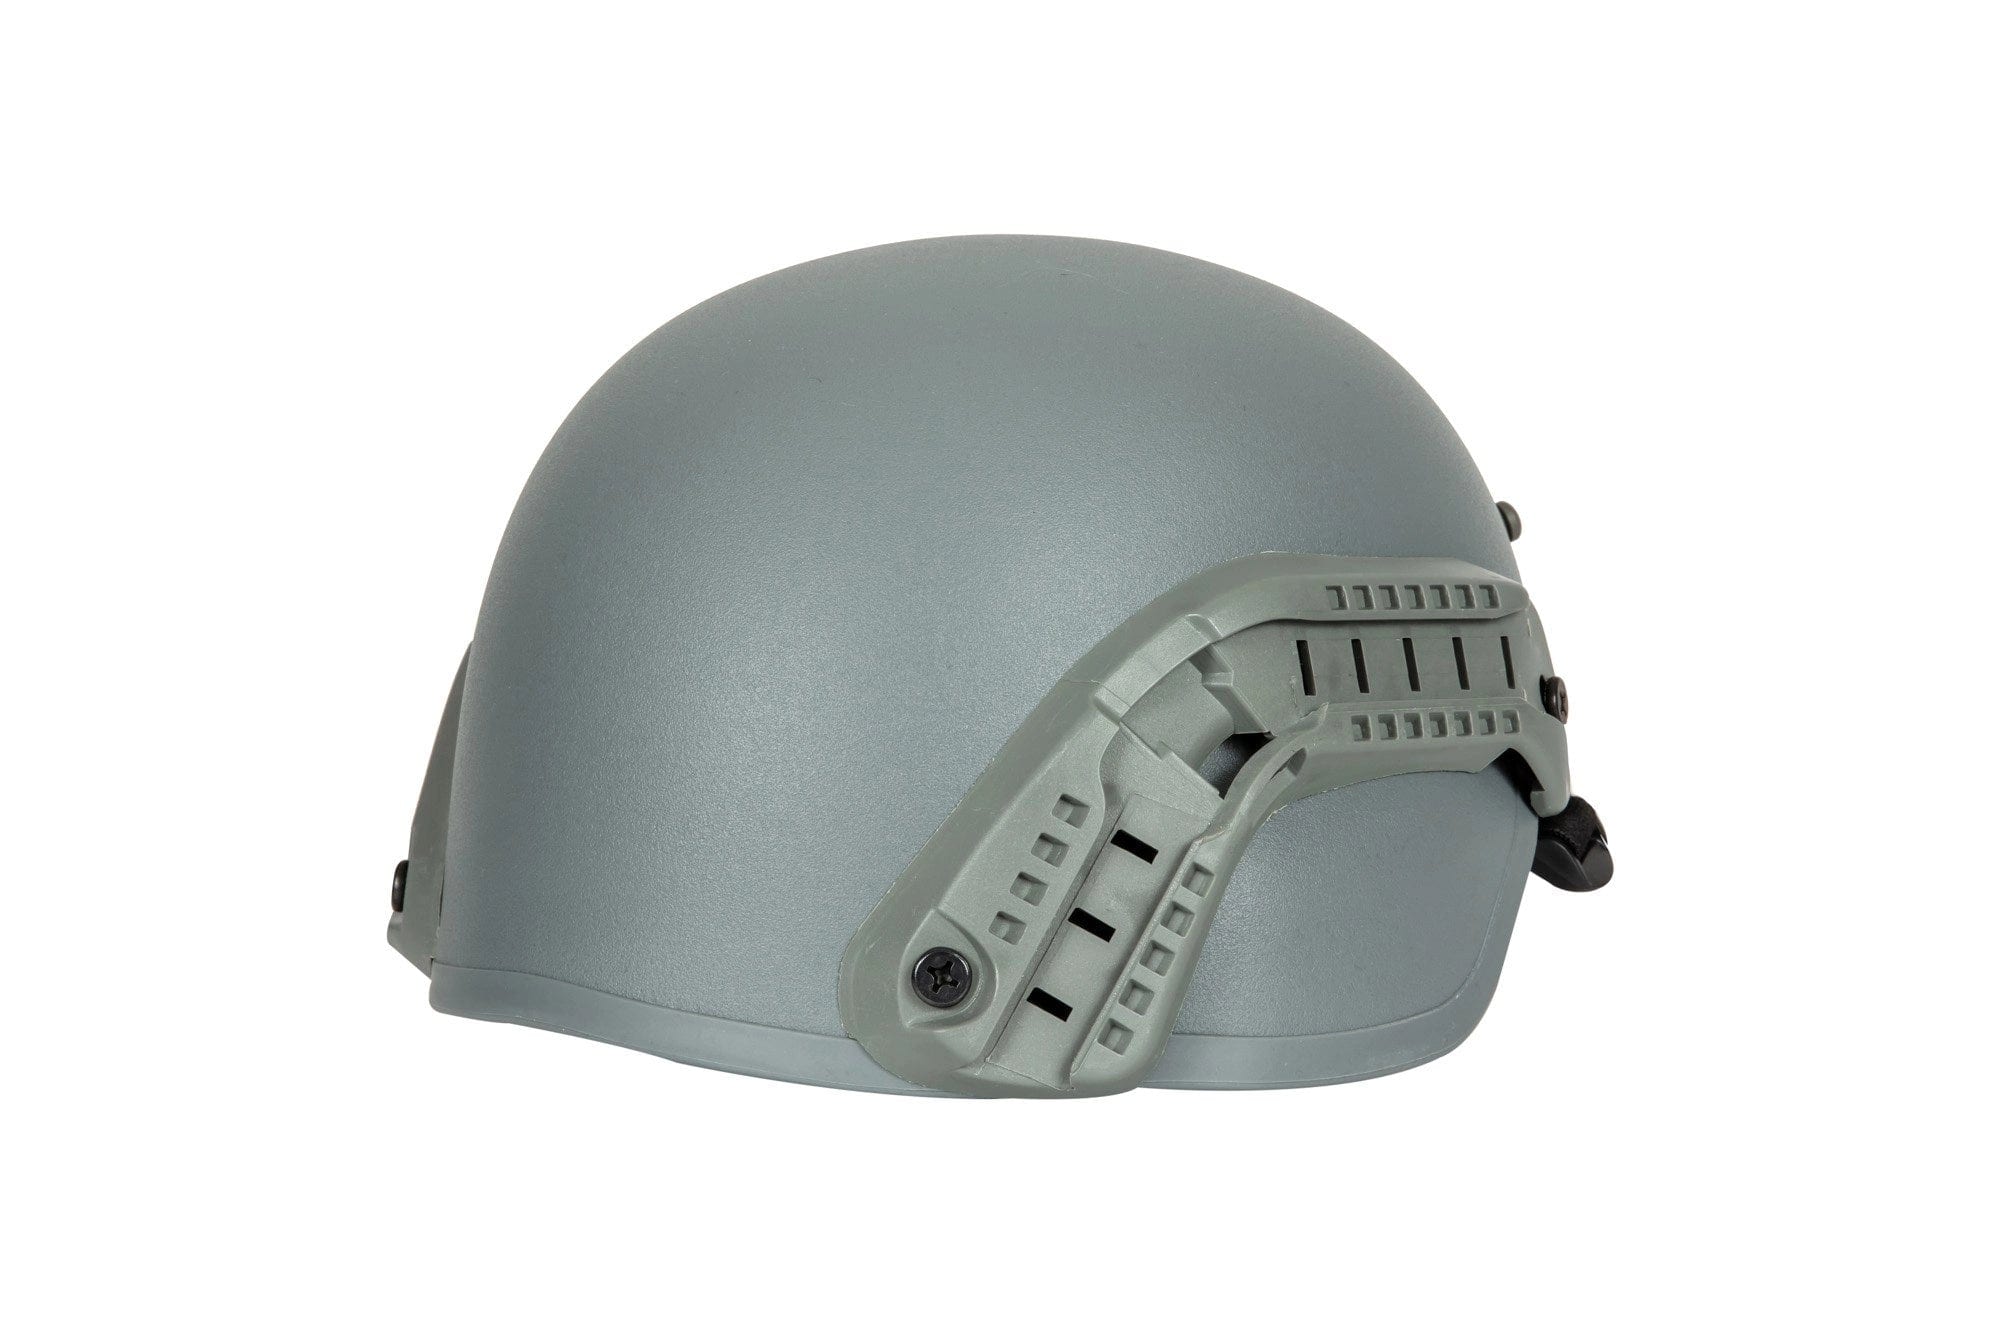 MICH 2000 Helmet Replica - Grey